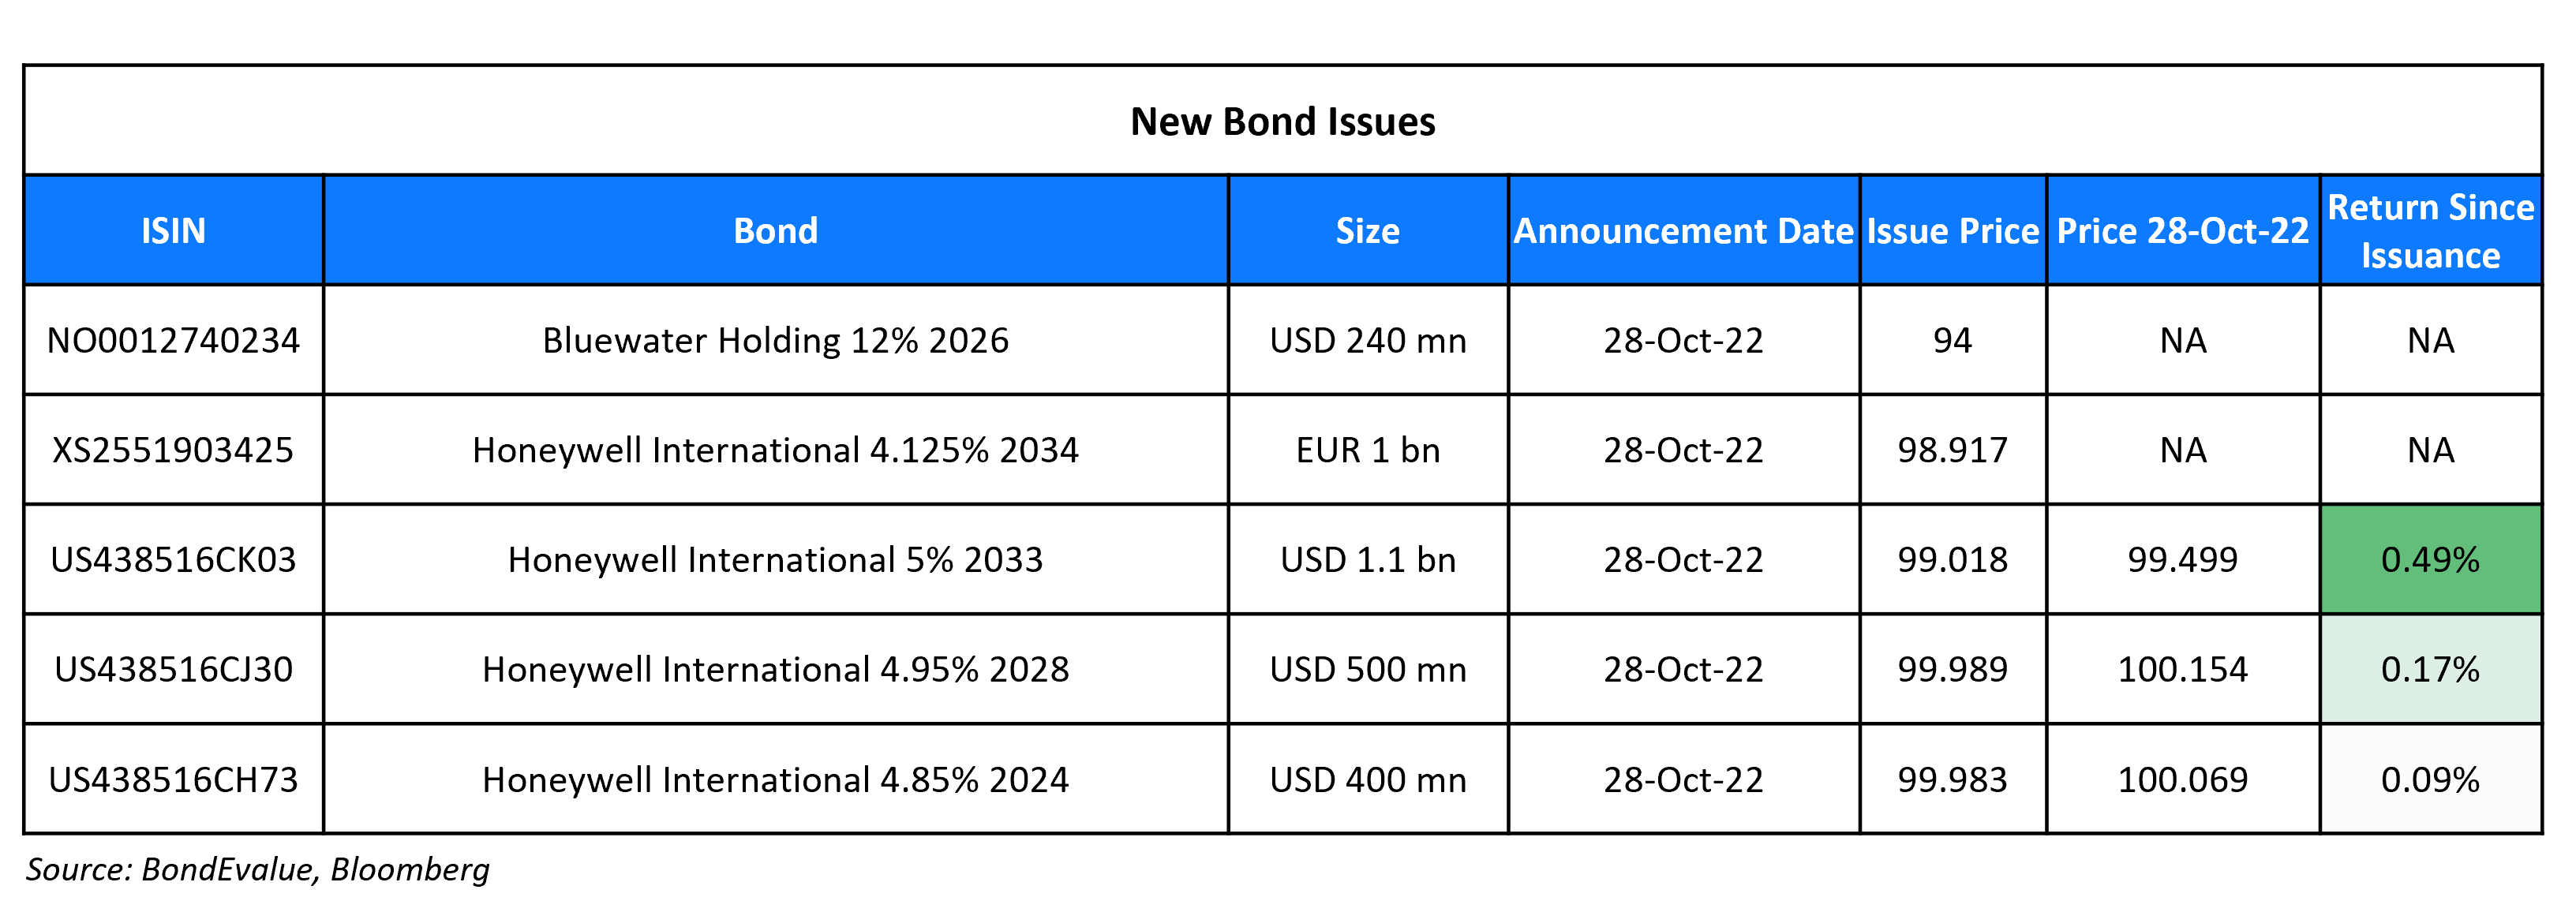 New Bond Issues 31 Oct 22 (1)